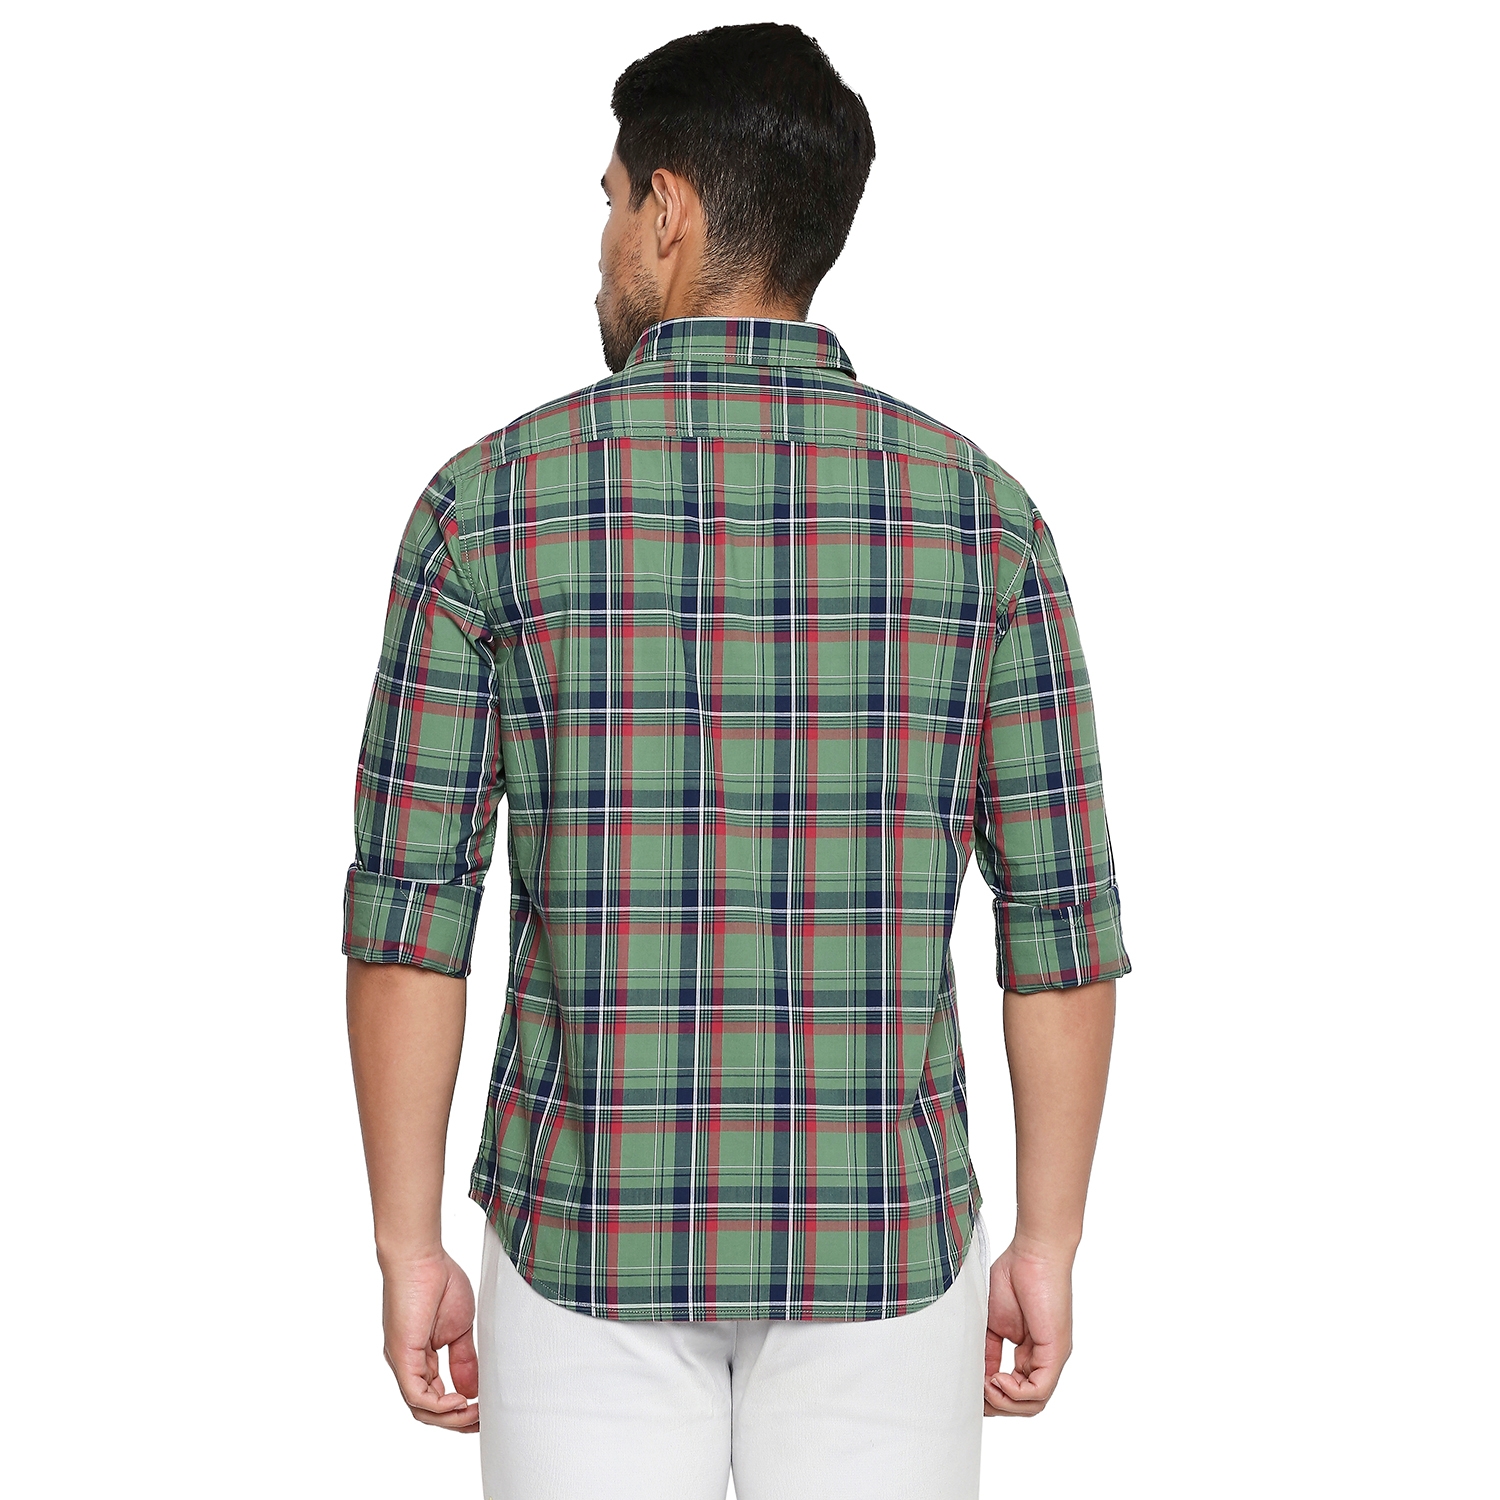 Basics | Men's Green Cotton Checked Casual Shirt 1